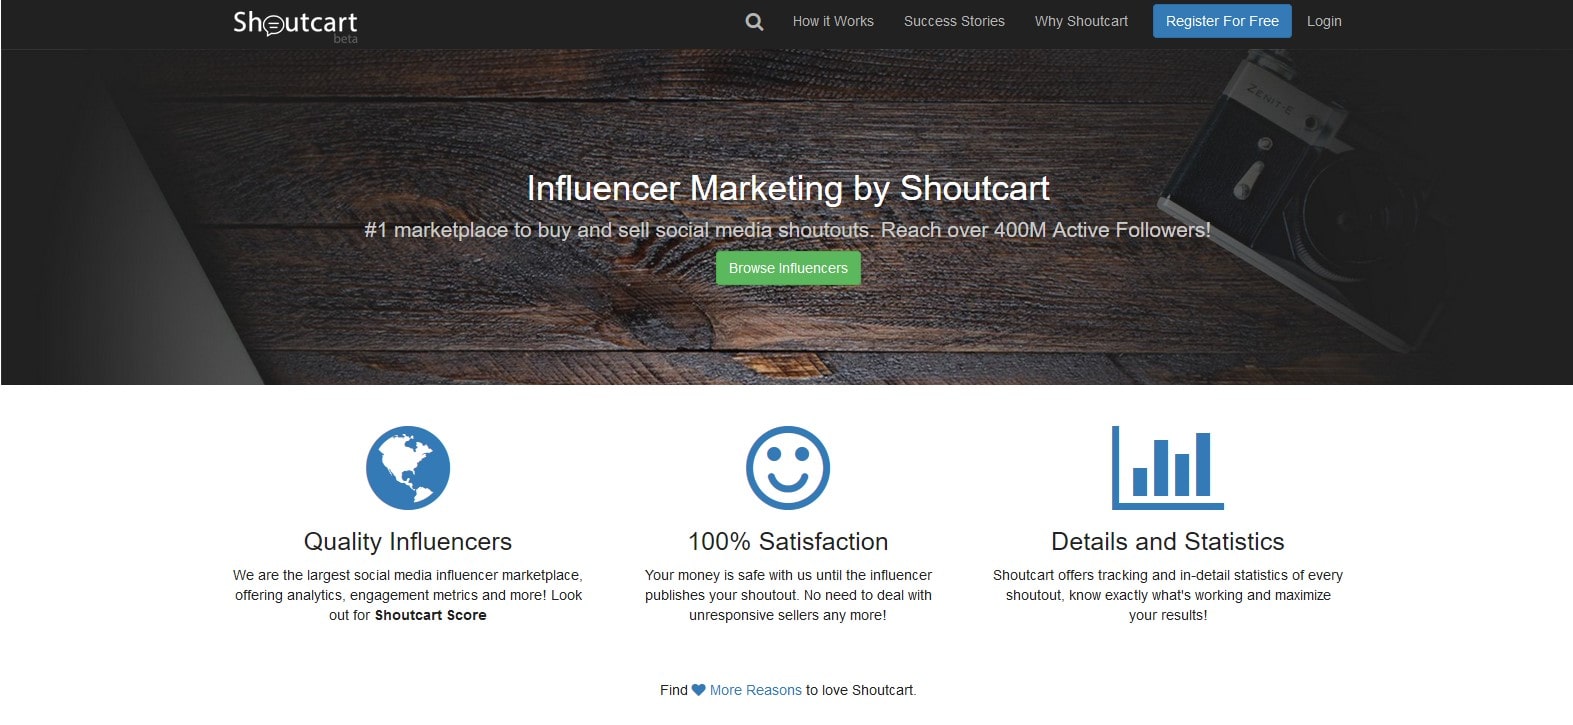 Shoutcart influencer marketing platform